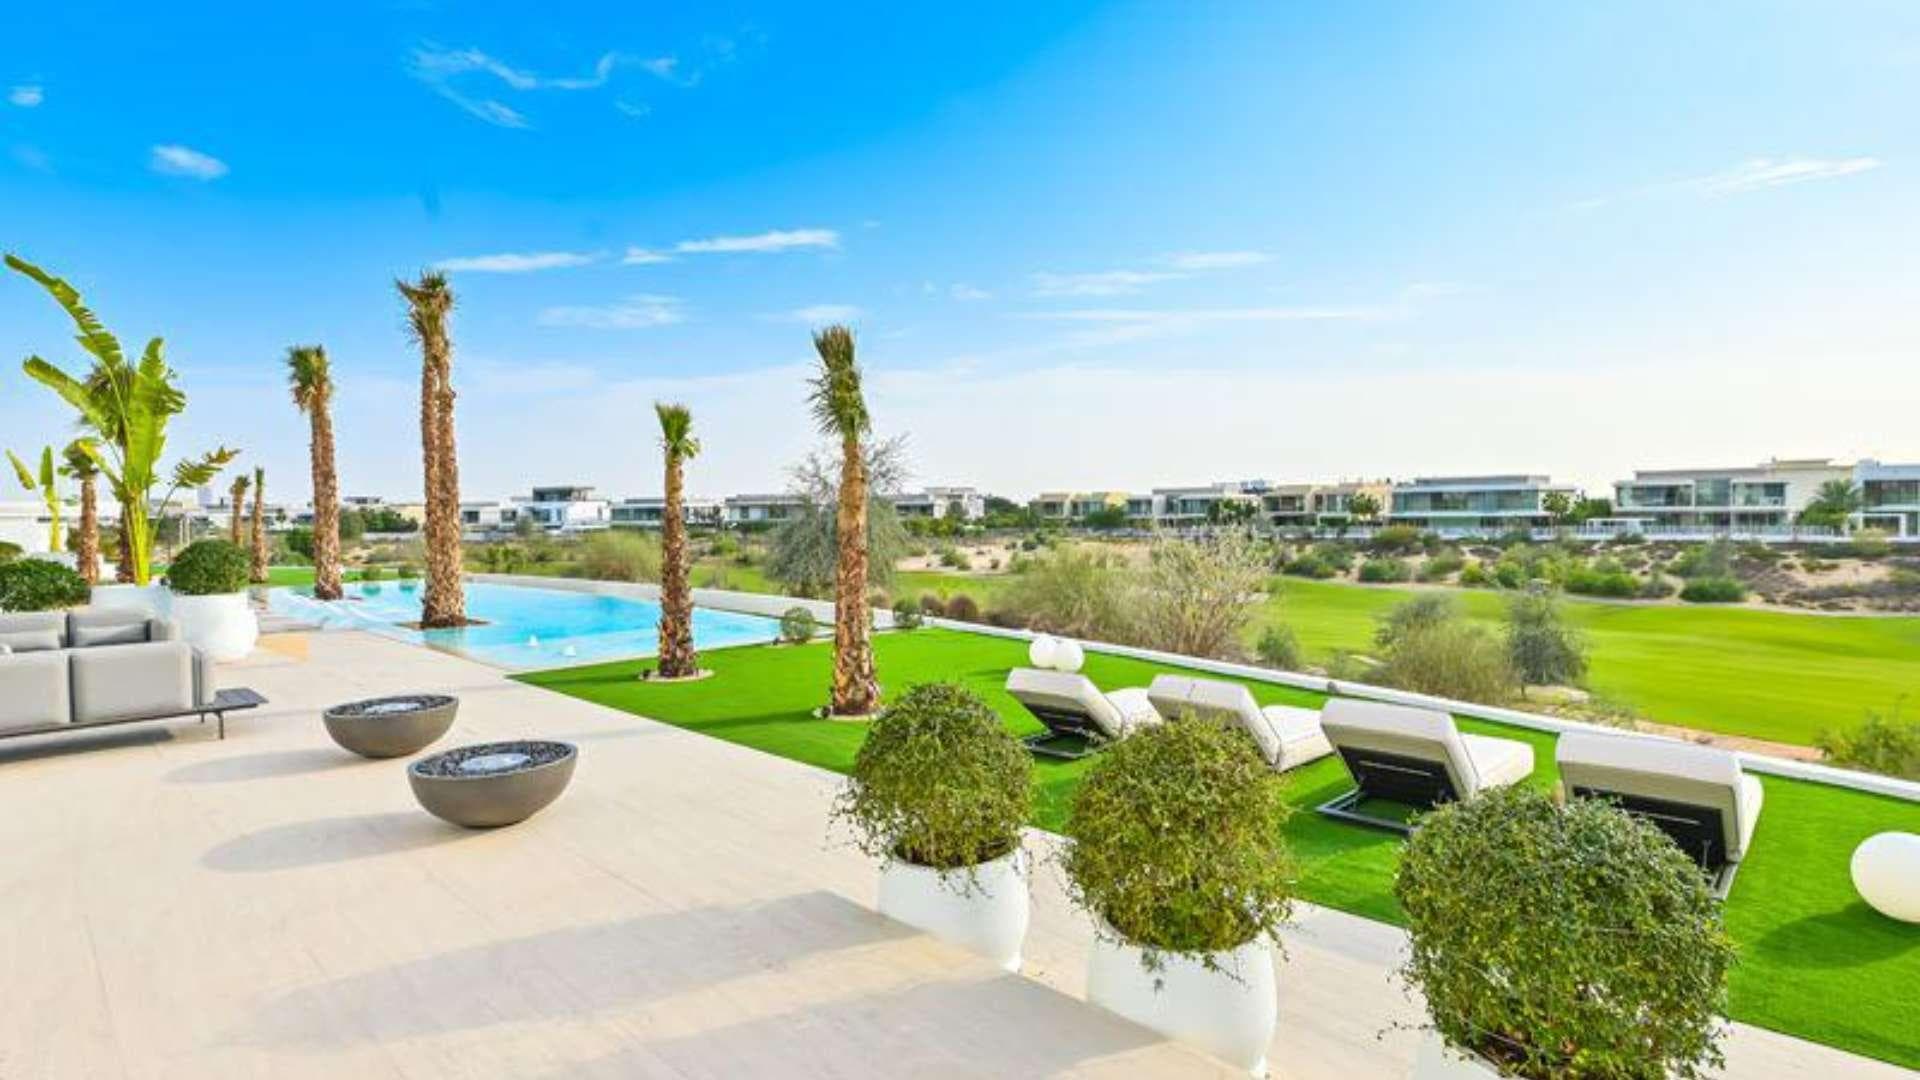 7 Bedroom Villa For Sale Dubai Hills Lp20693 2944fd206d0dfe00.jpg